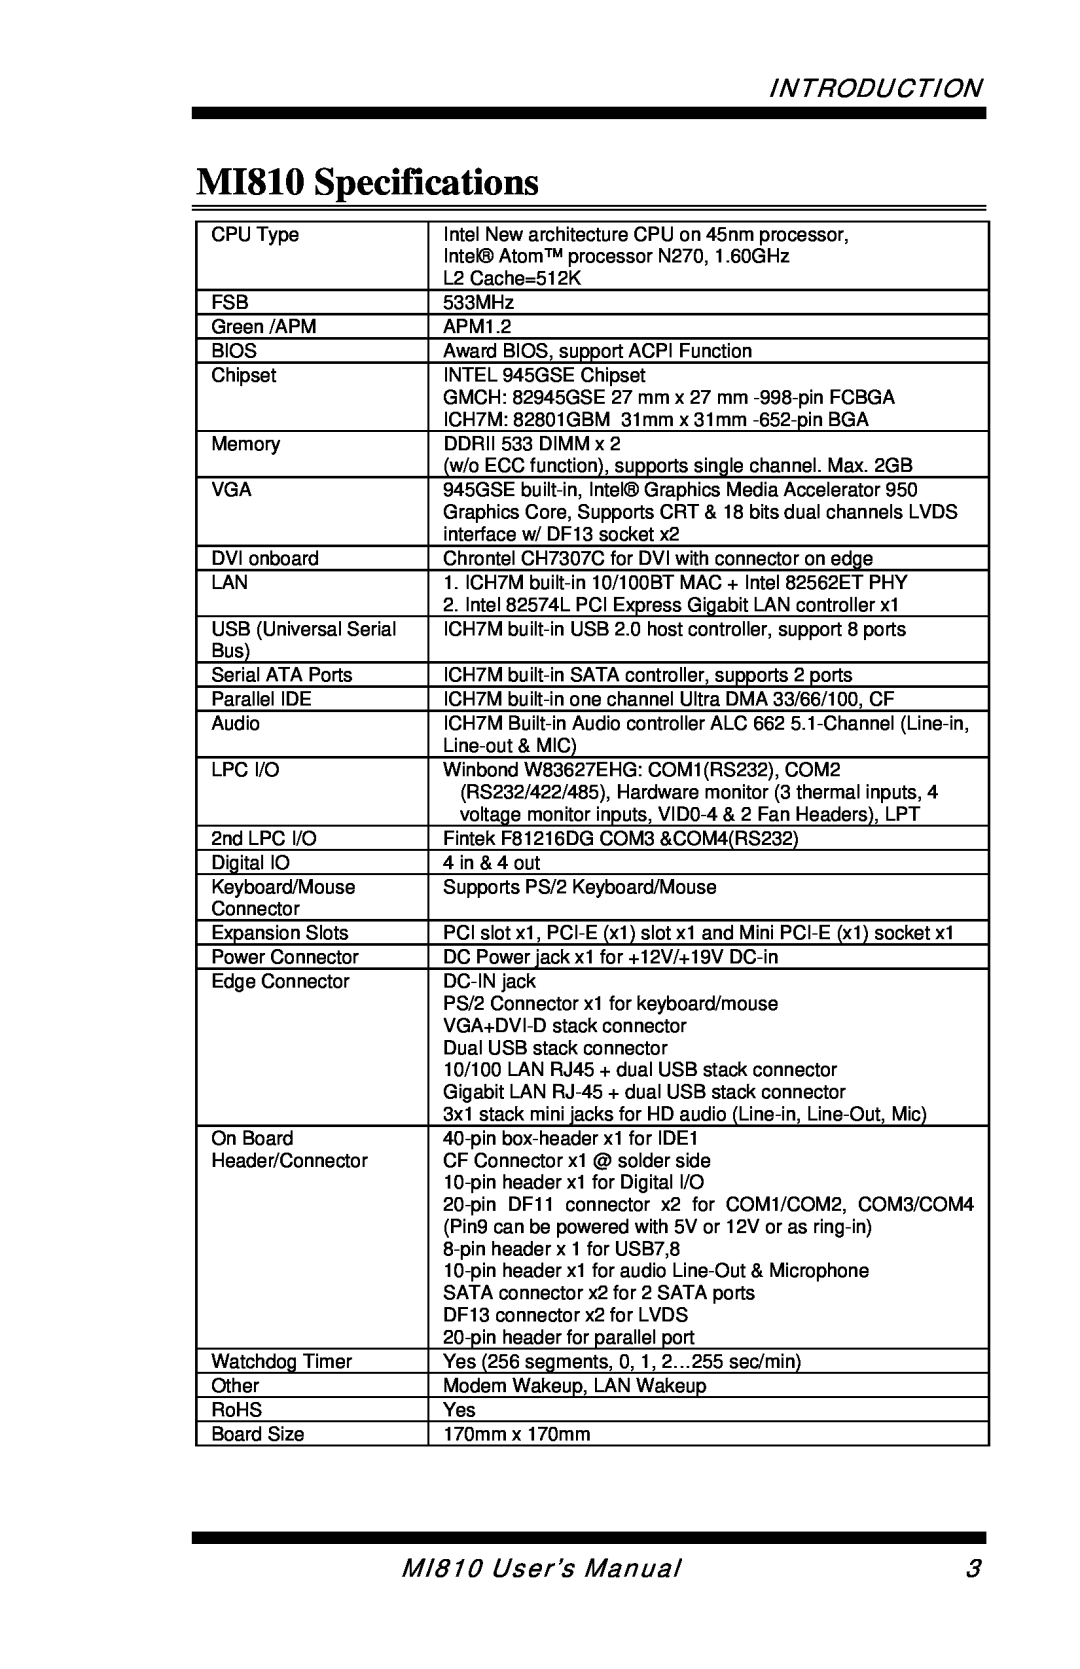 Intel user manual MI810 Specifications, Introduction, MI810 User’s Manual 